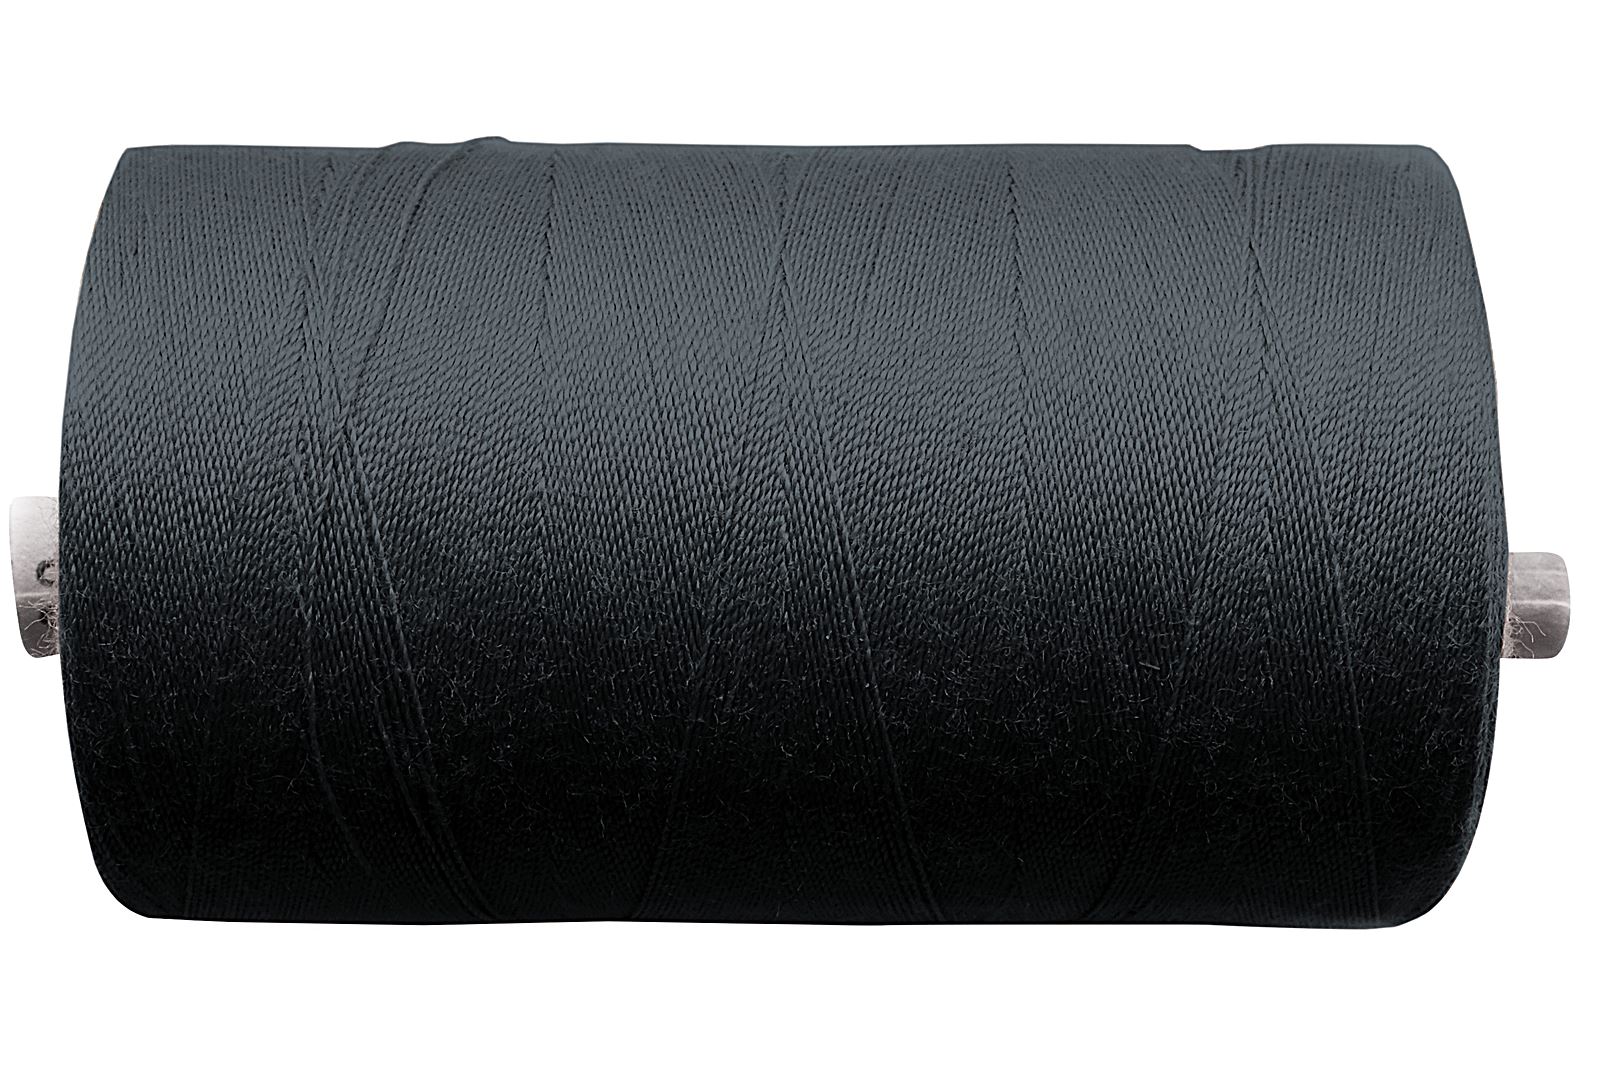 Linha de costura – Qualidade industrial 100 - Cinza escuro